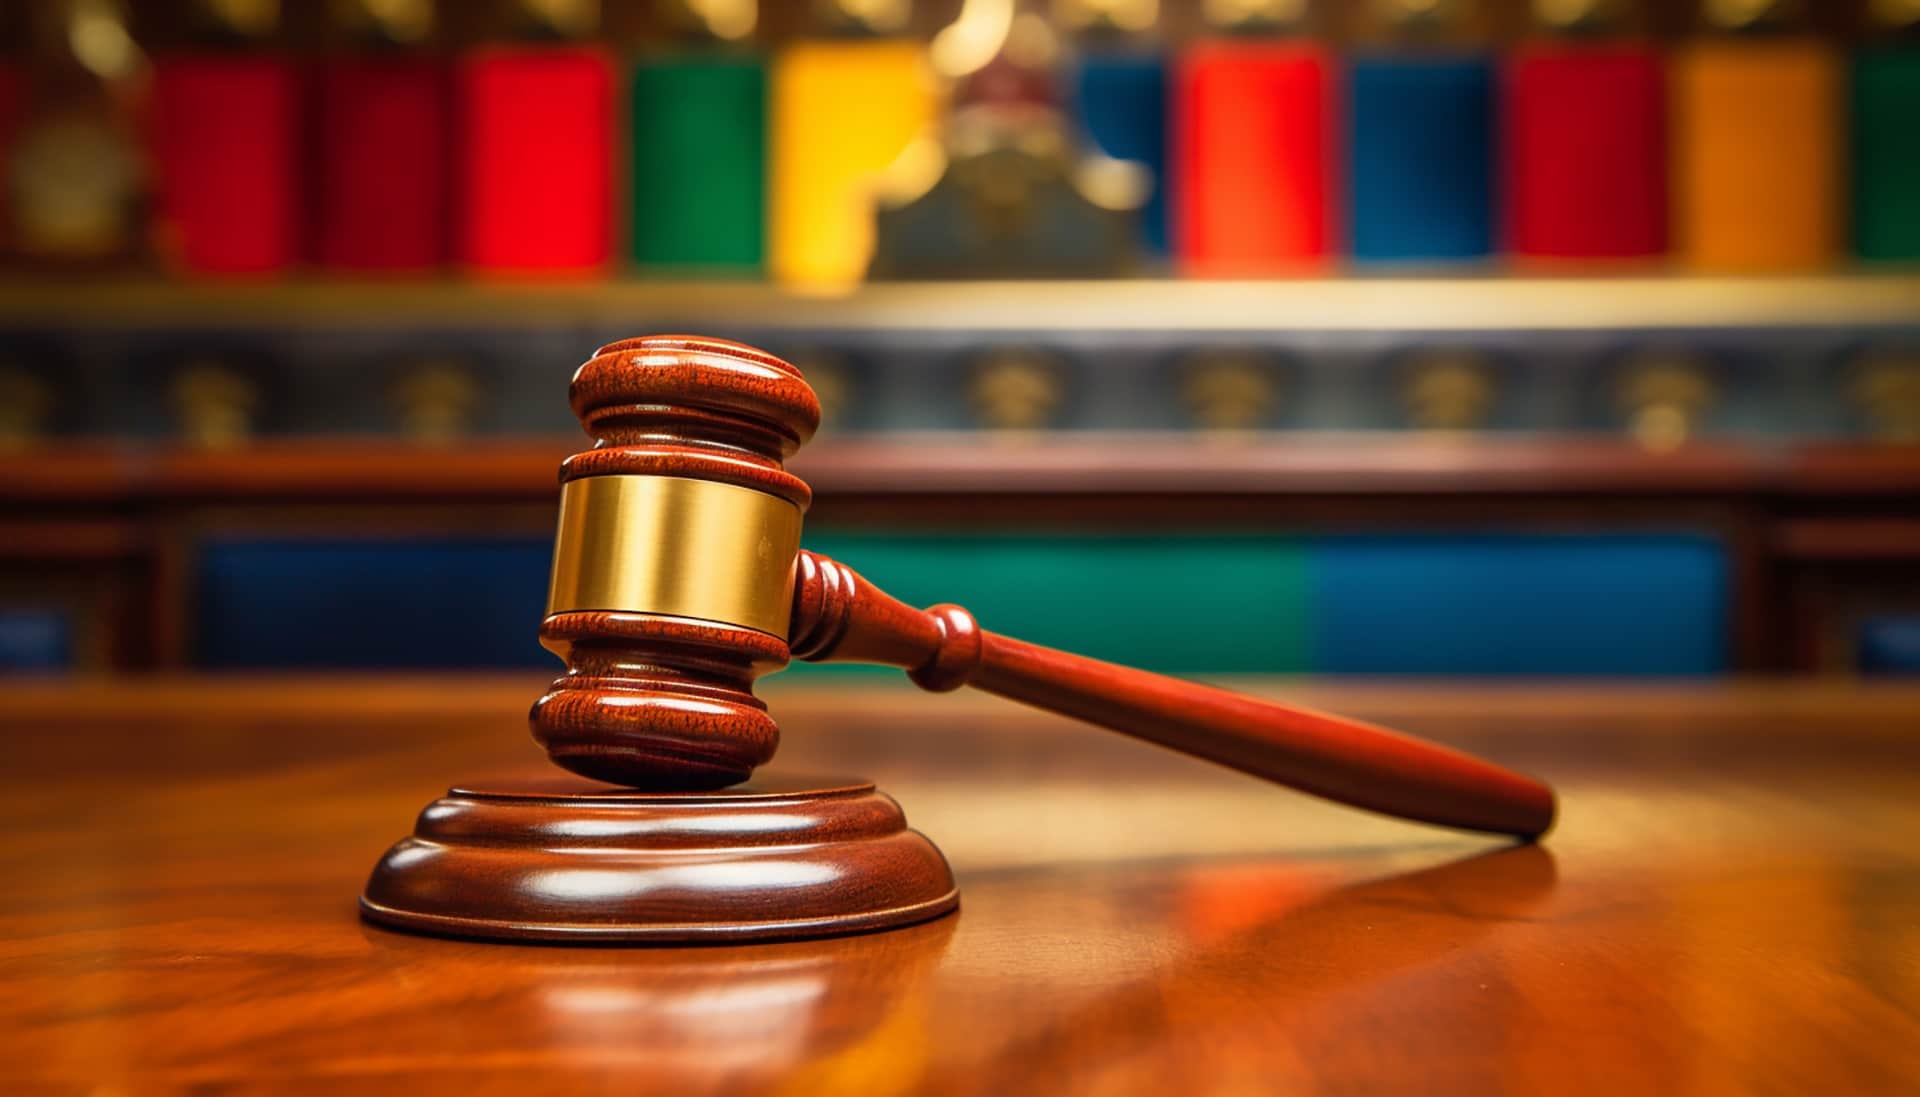 #Google will face a new U.S. antitrust jury trial in September